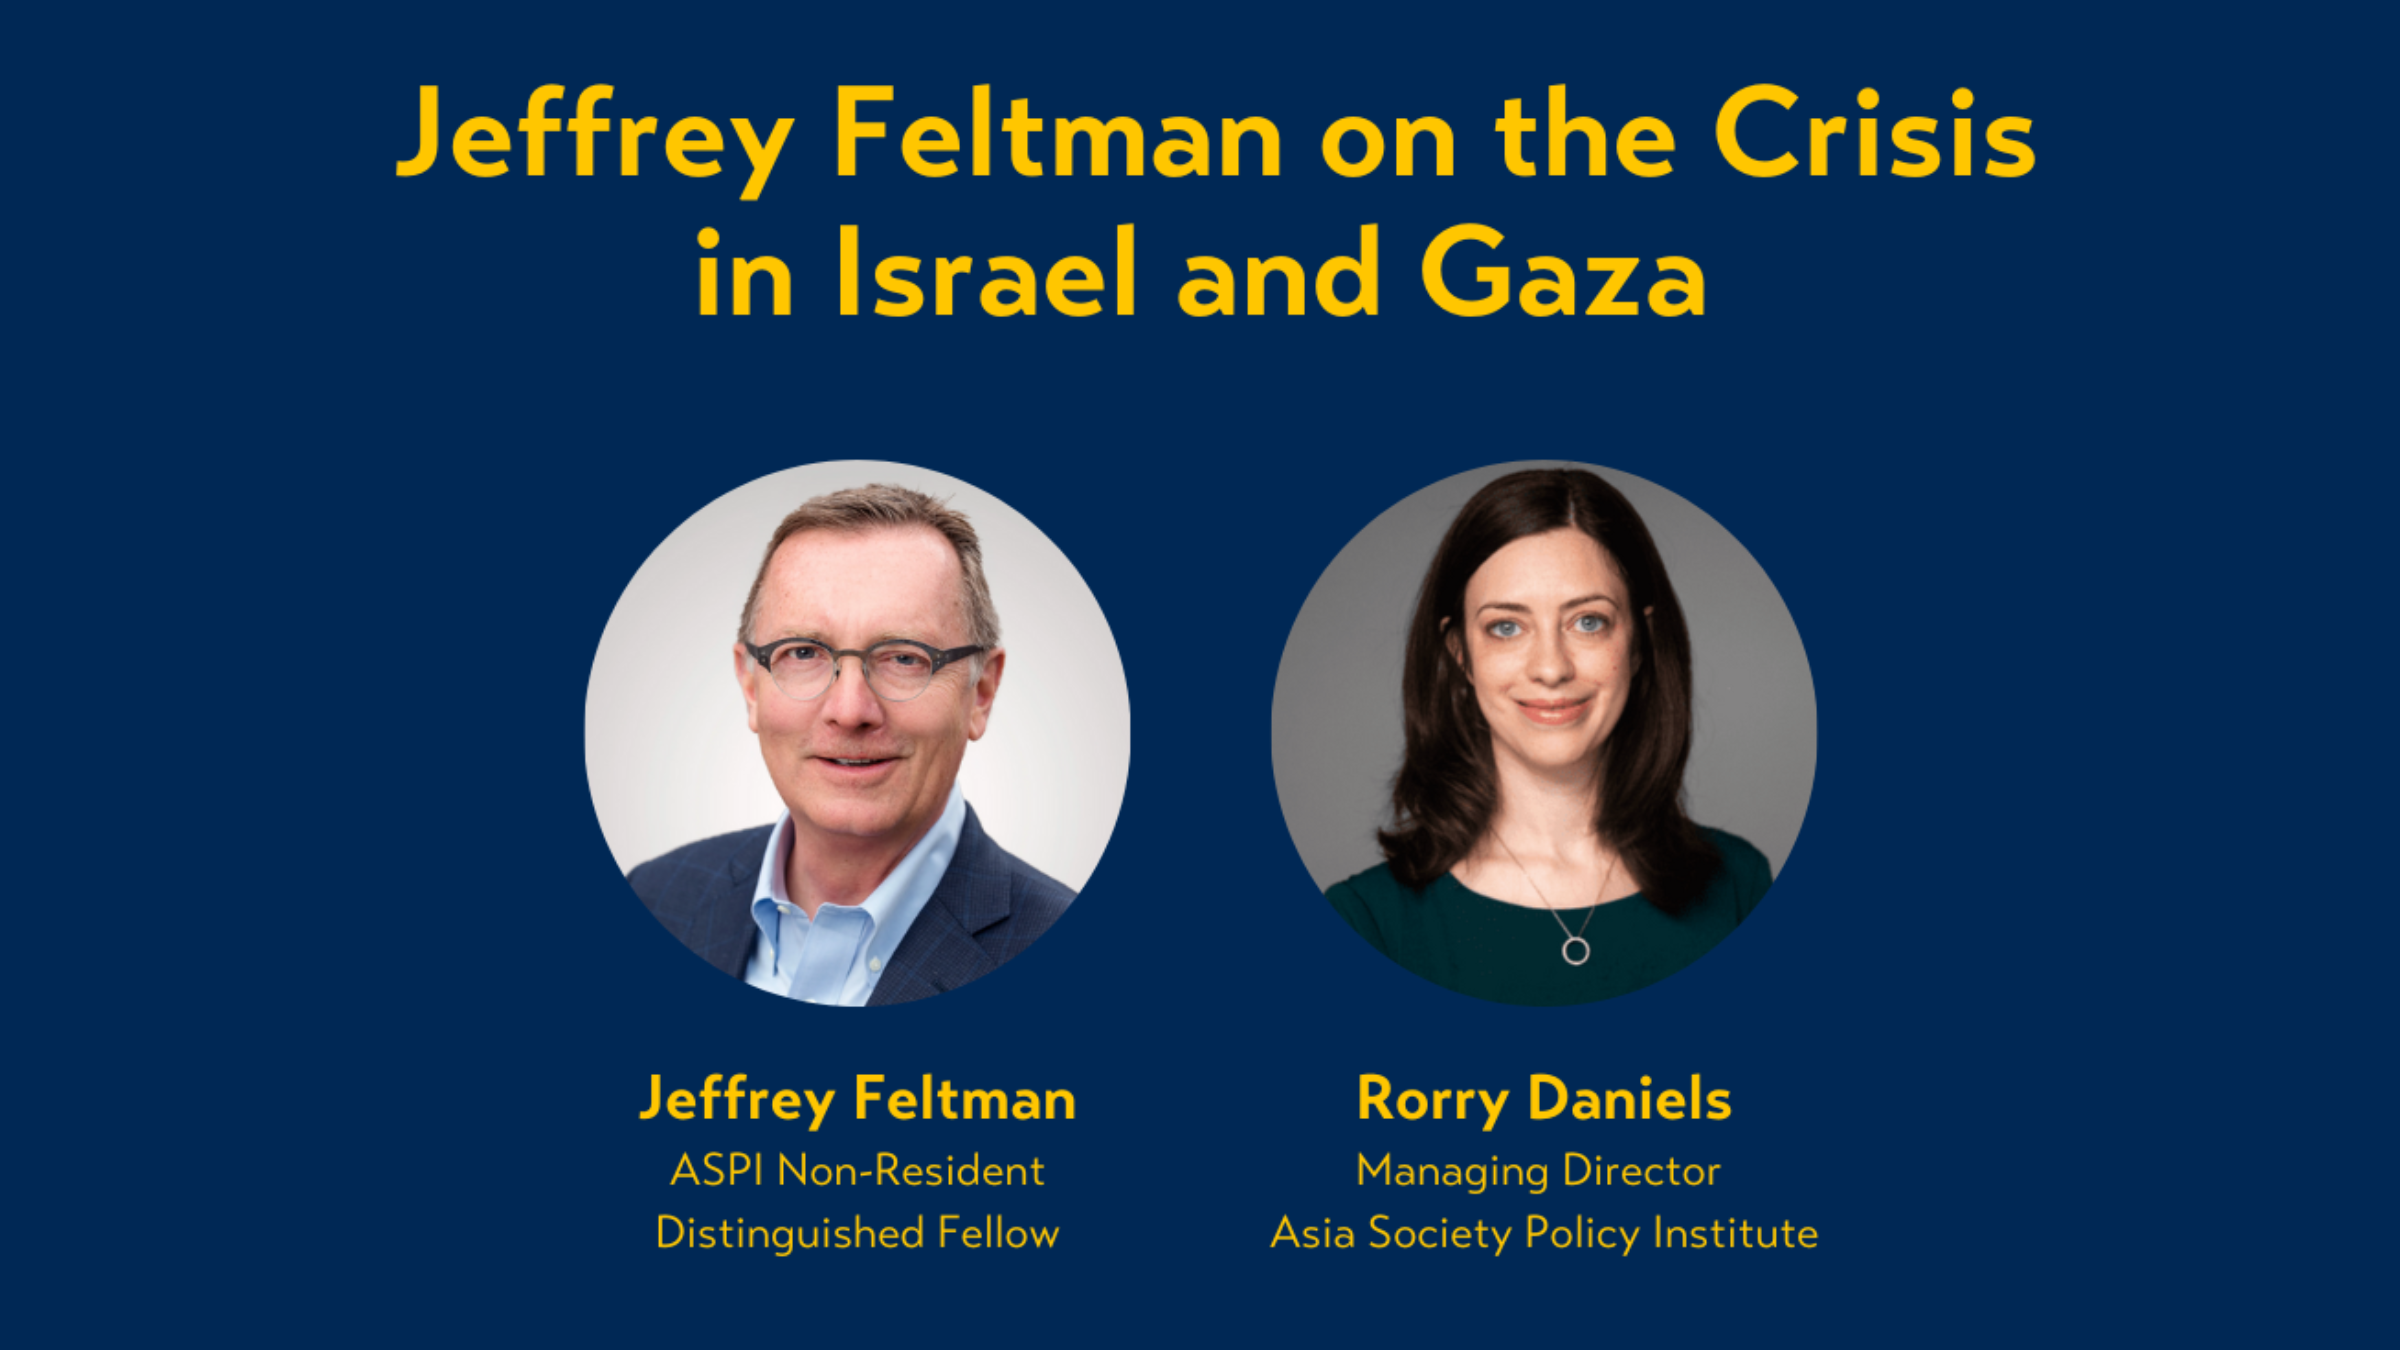 Jeffrey Feltman on the Crisis in Israel and Gaza Jeffrey Feltman and Rorry Daniels Headshots